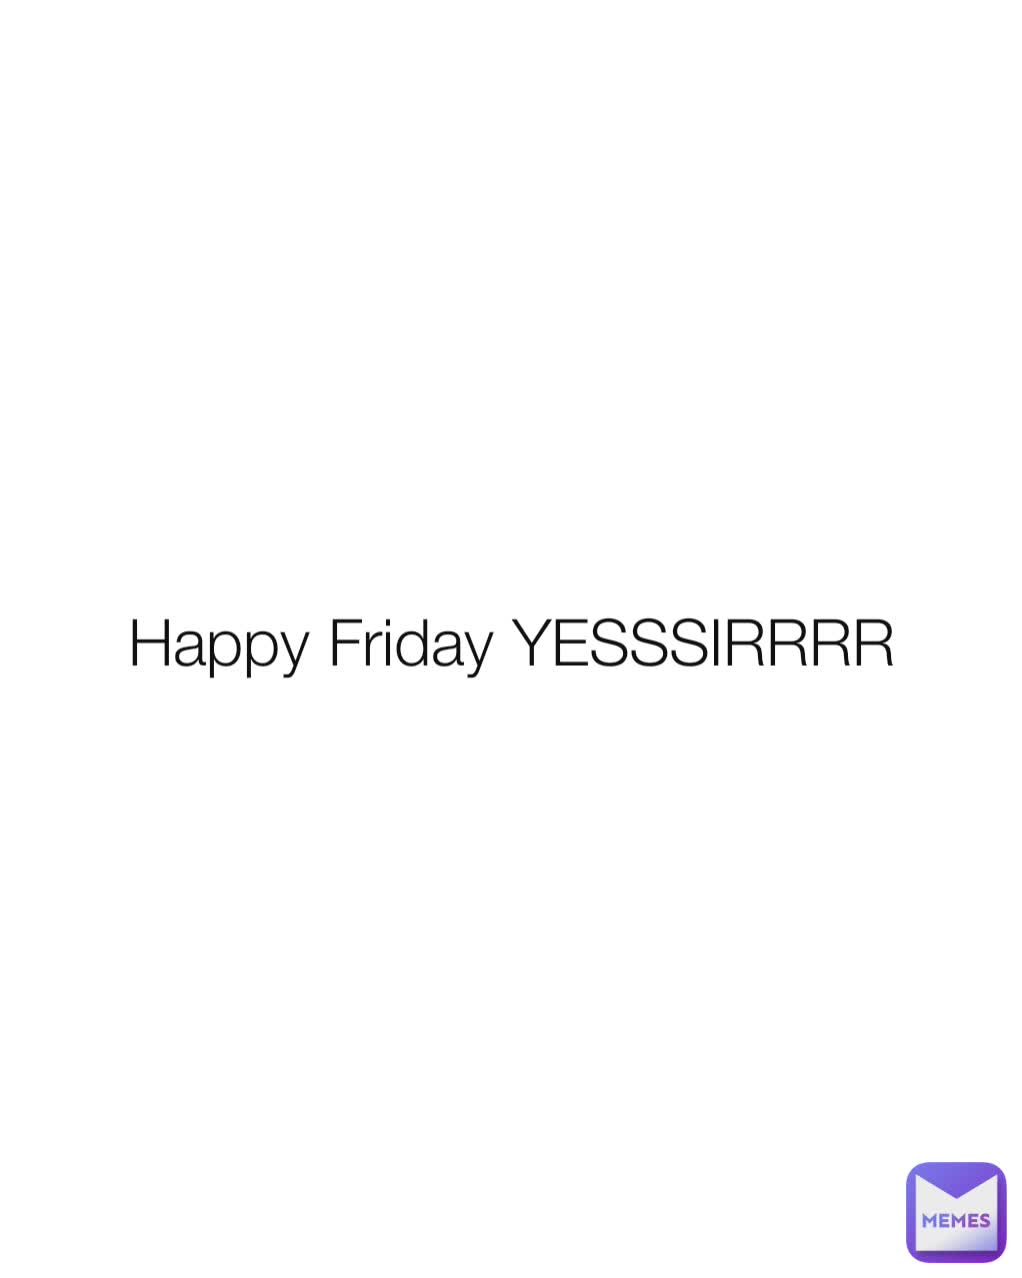 Happy Friday YESSSIRRRR